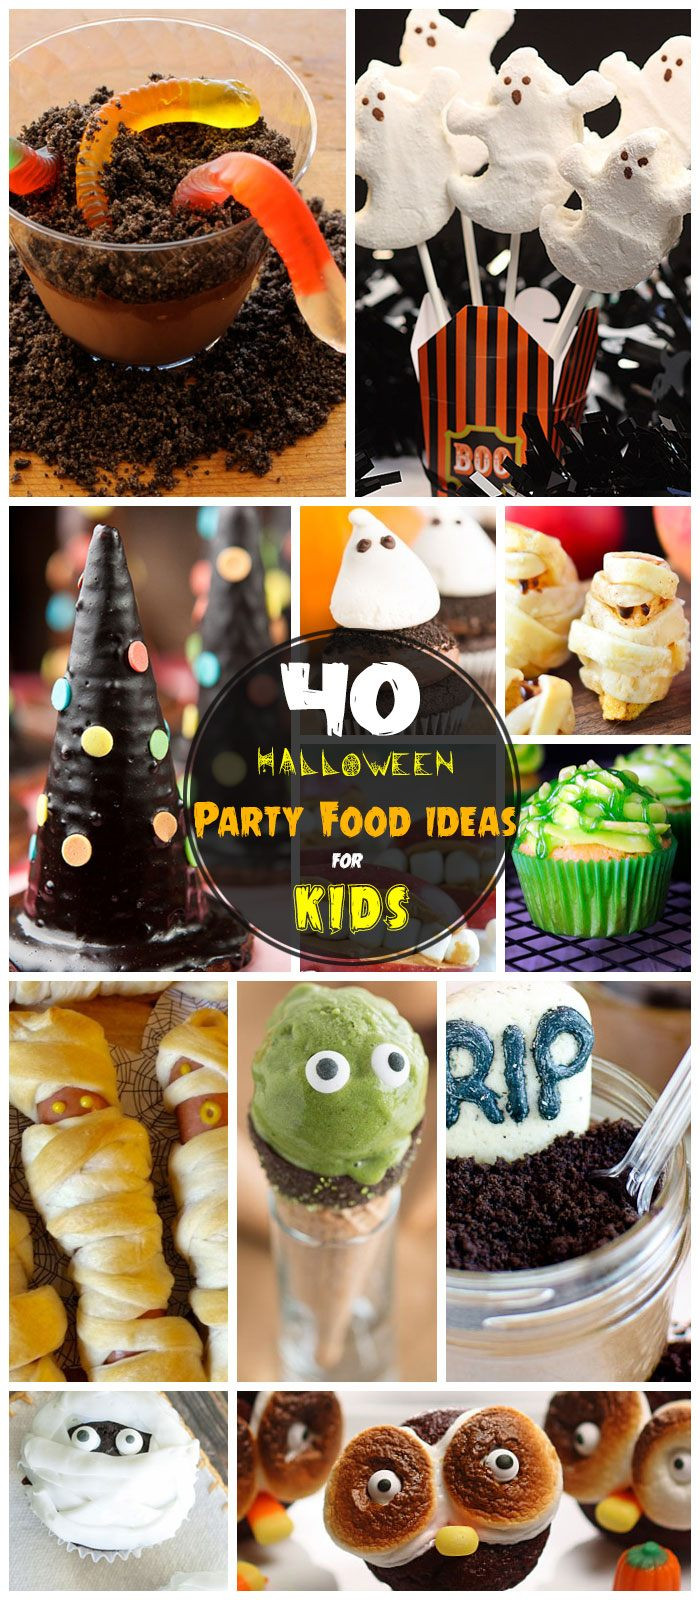 Halloween Party Food Ideas For Kids
 40 Halloween Party Food Ideas for Kids